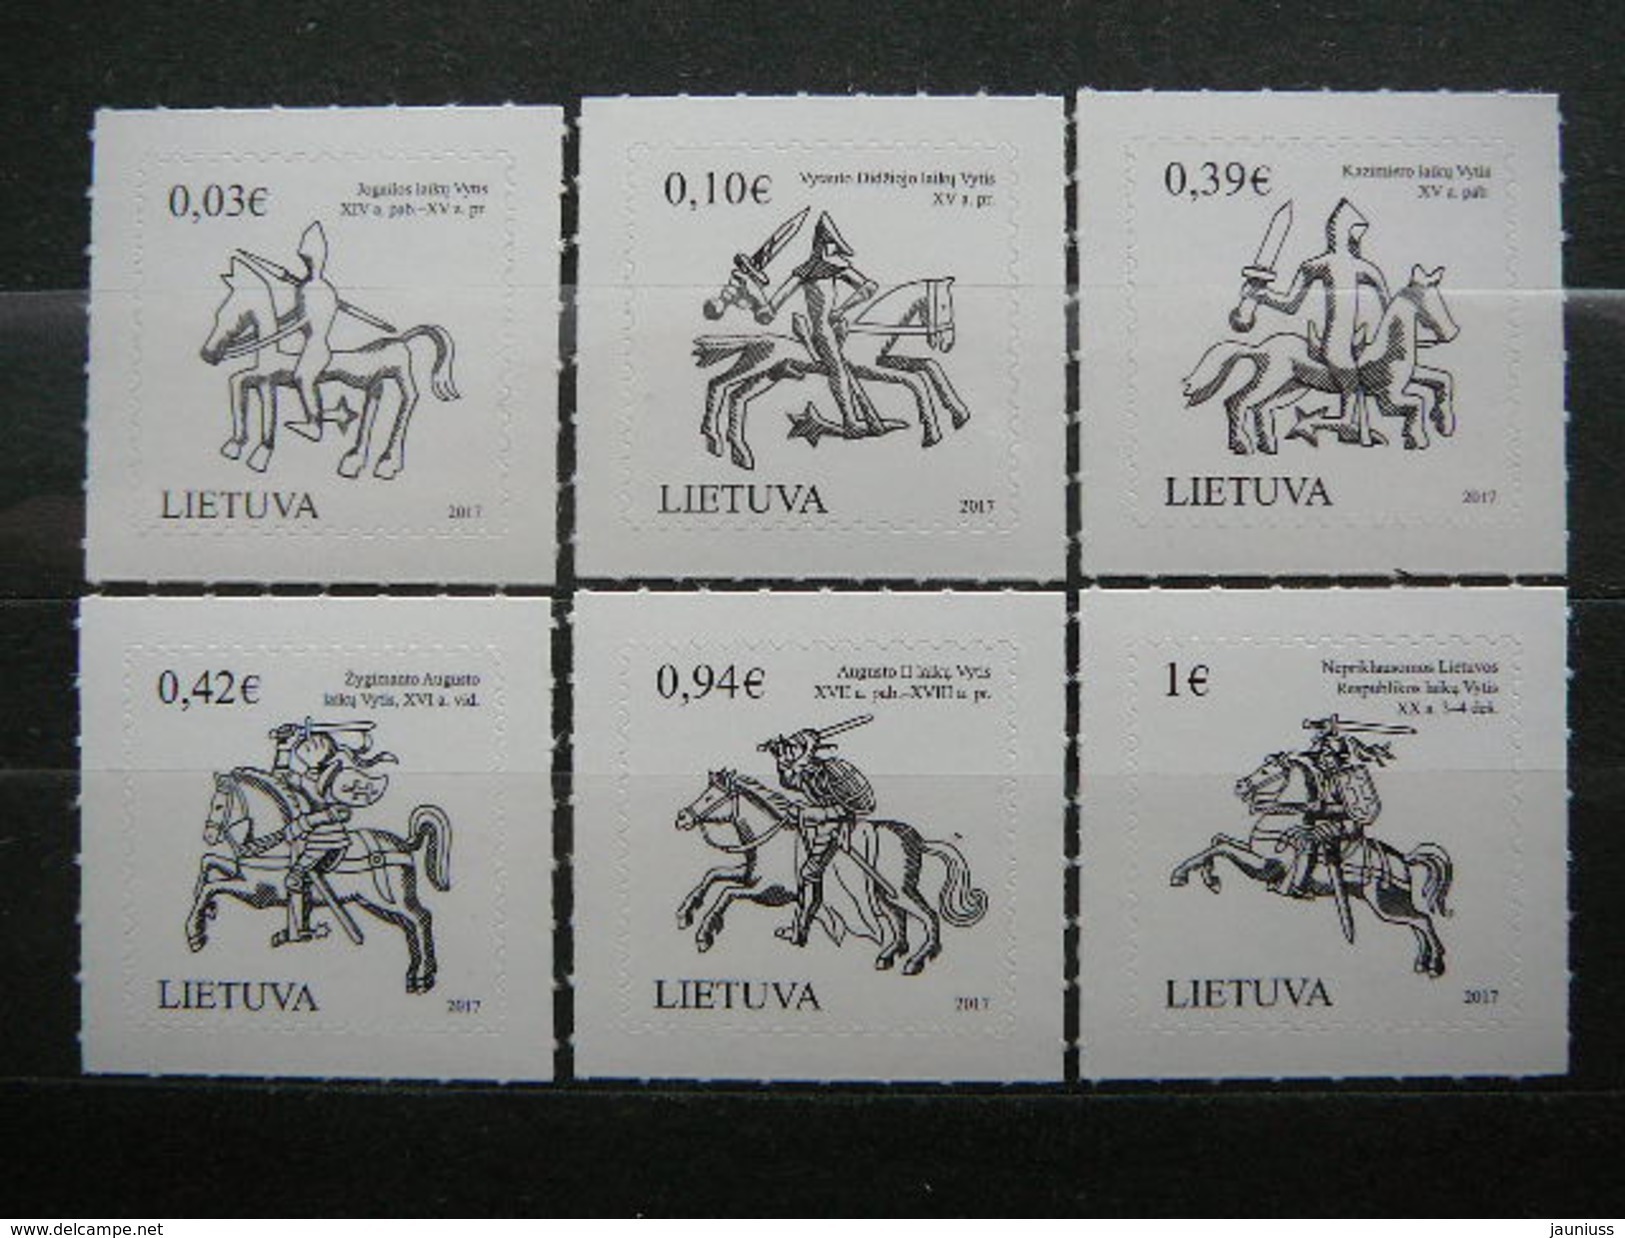 Horses # Lietuva Lithuania Litauen Lituanie Litouwen # 2017 MNH #Mi. 1236/1 Lithuanian State Symbol - Vytis. - Lithuania